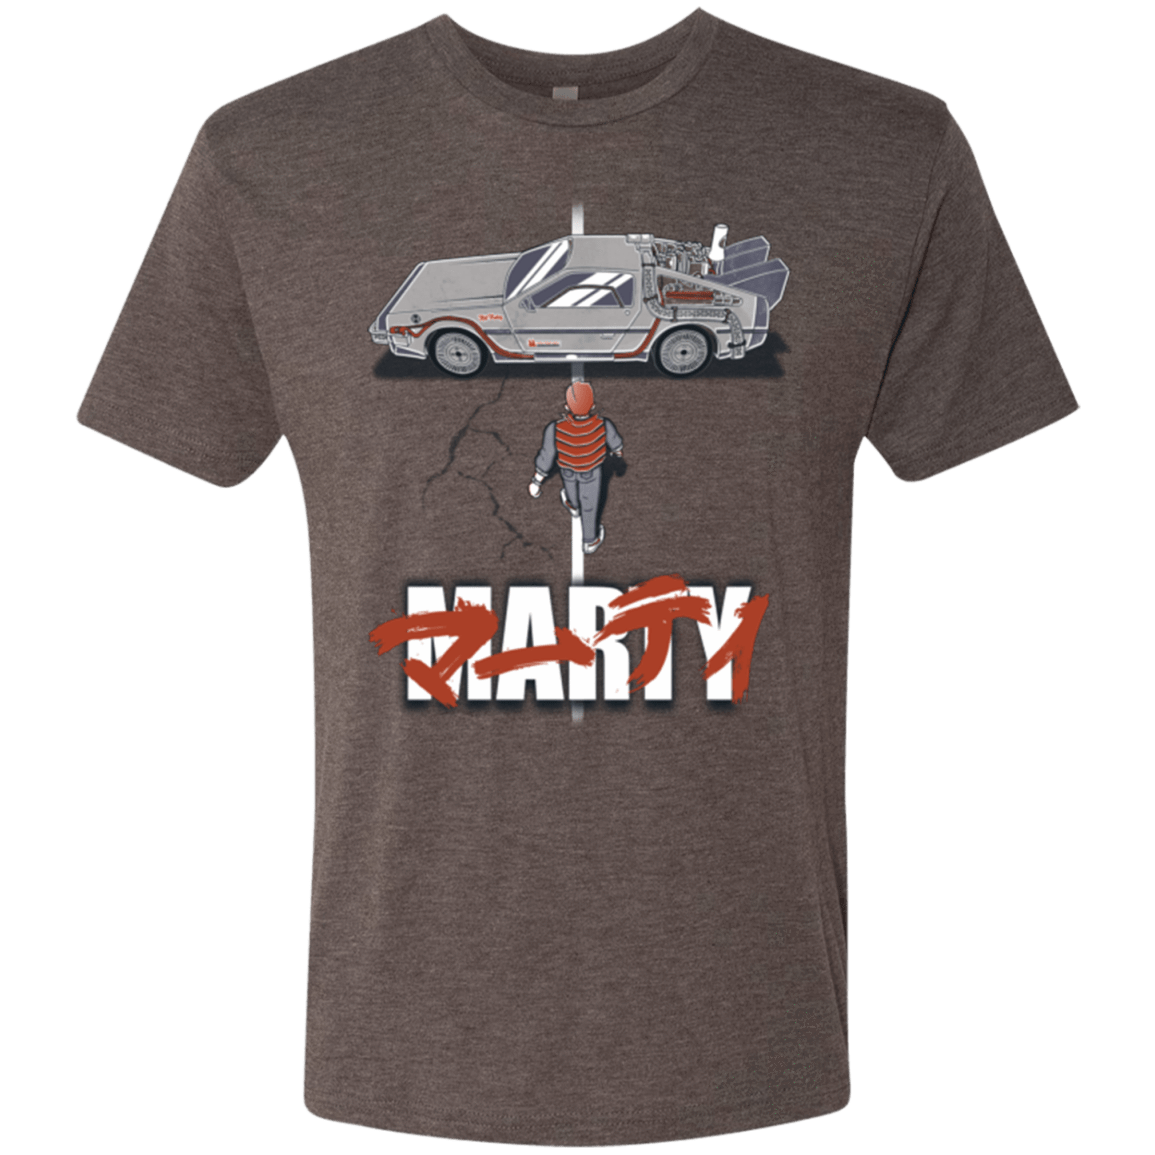 T-Shirts Macchiato / Small Marty 2015 Men's Triblend T-Shirt